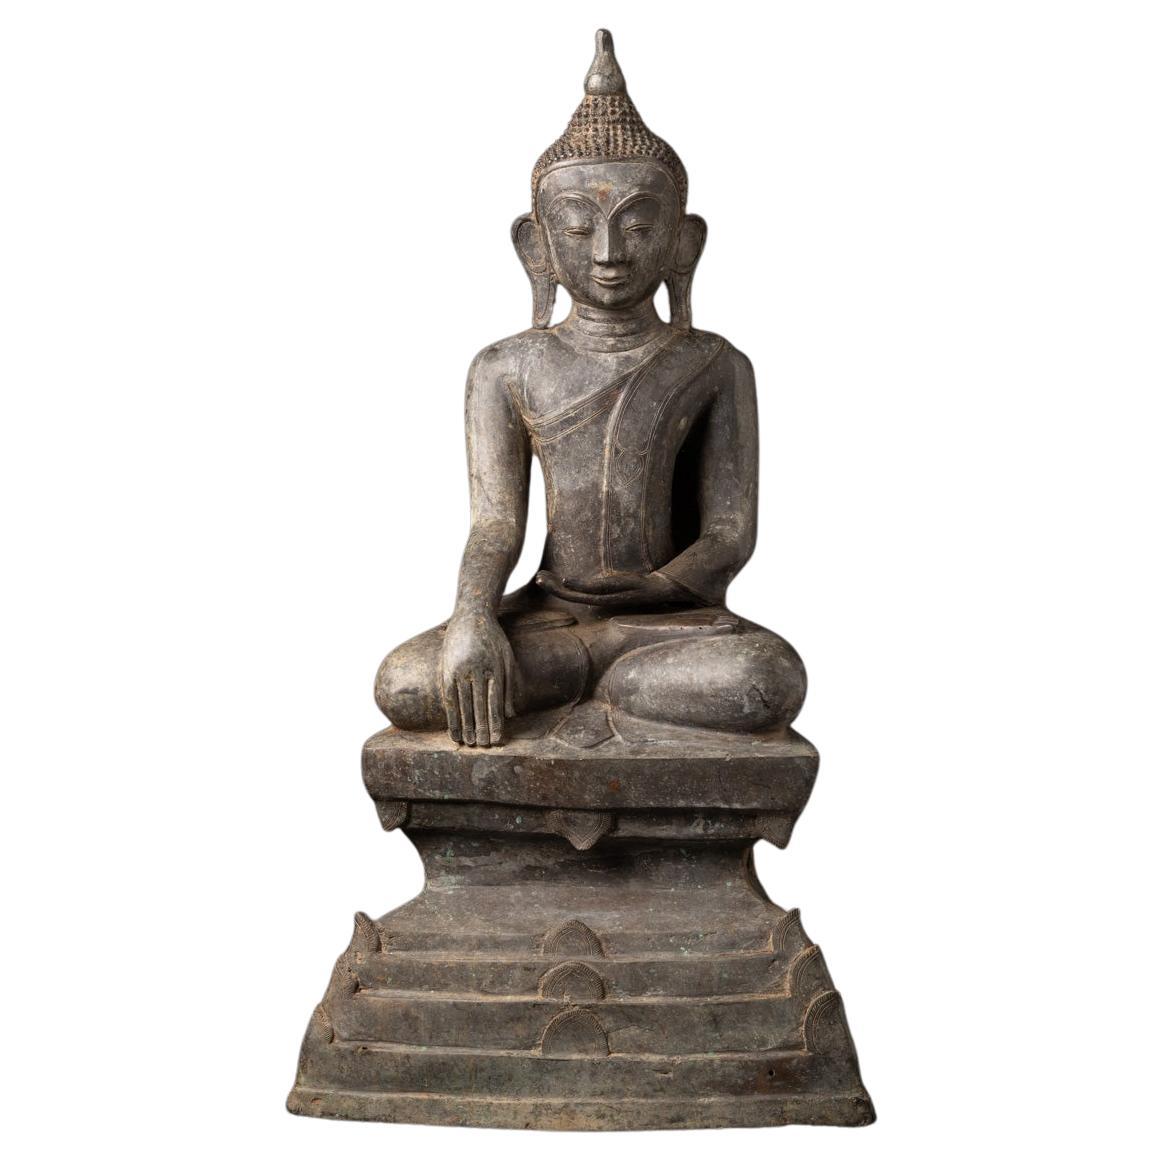 Old bronze Burmese Buddha statue from Burma